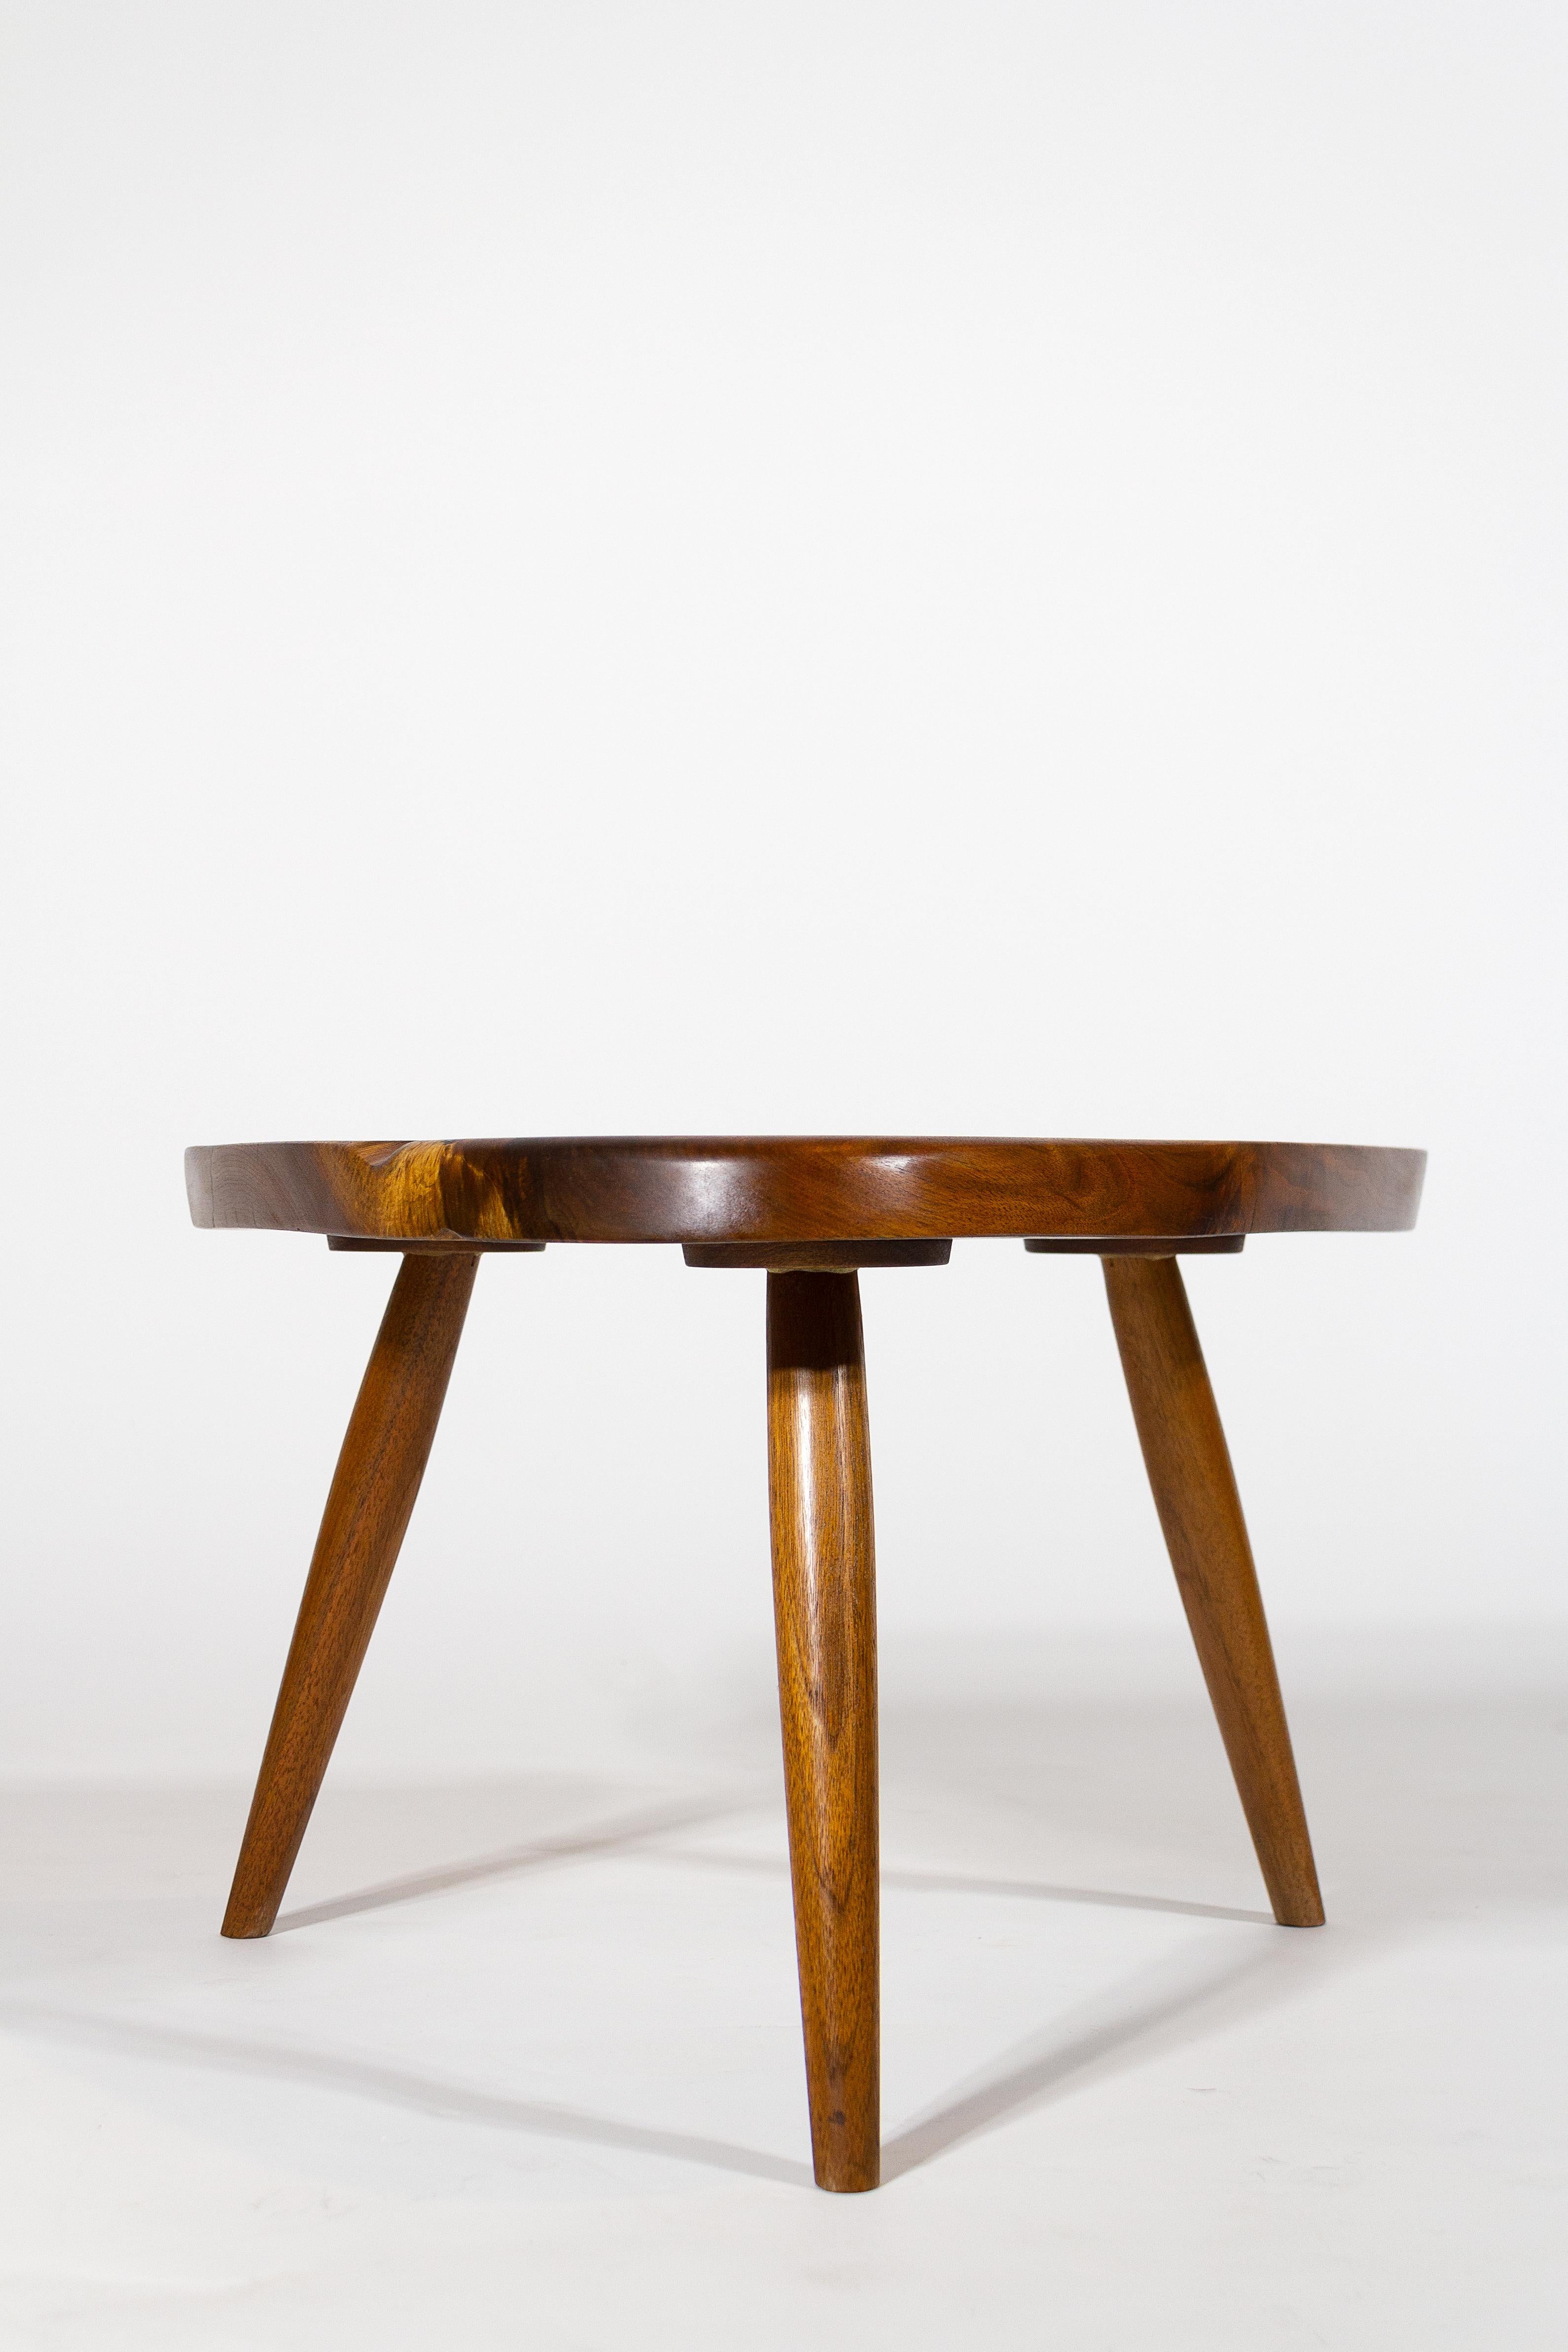 Contemporary George Nakashima Studio Wepman Side Tables in Walnut Signed by Mira Nakashima 